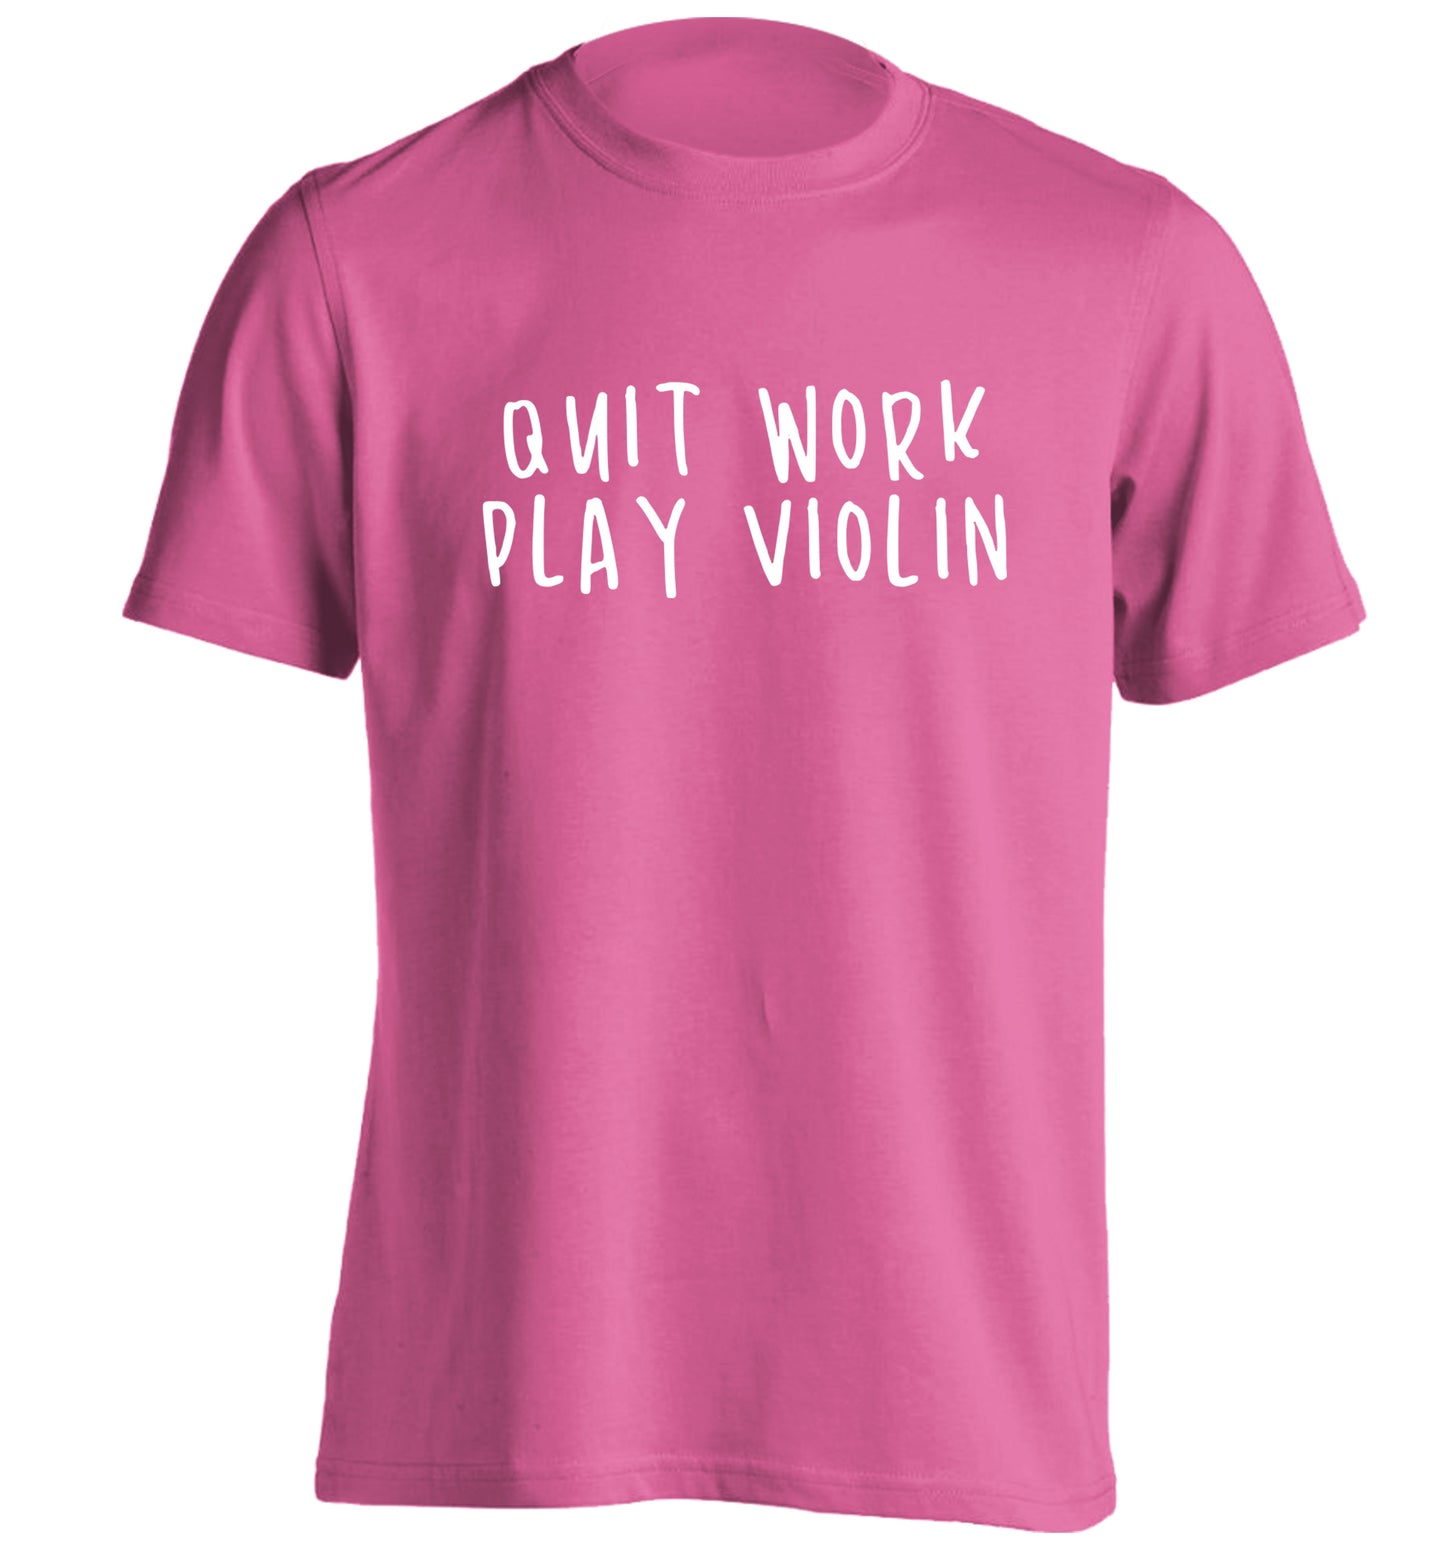 Quit work play violin adults unisex pink Tshirt 2XL